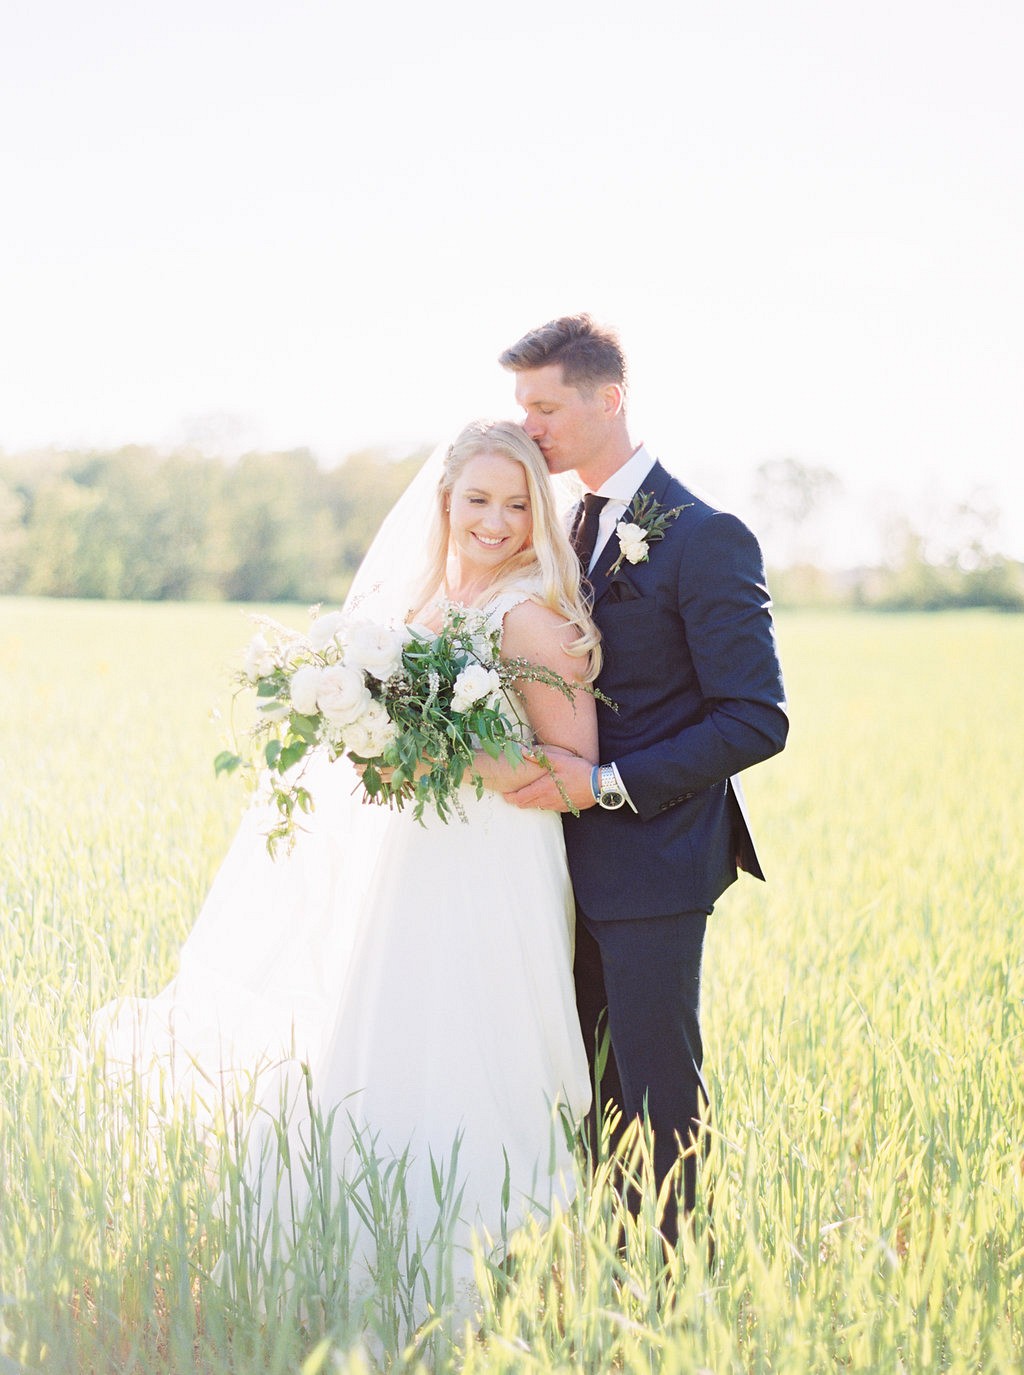 Bride and groom | Heartfelt and Nostalgic Indiana Barn Wedding by Renee Lemaire | Wedding Sparrow fine art wedding blog